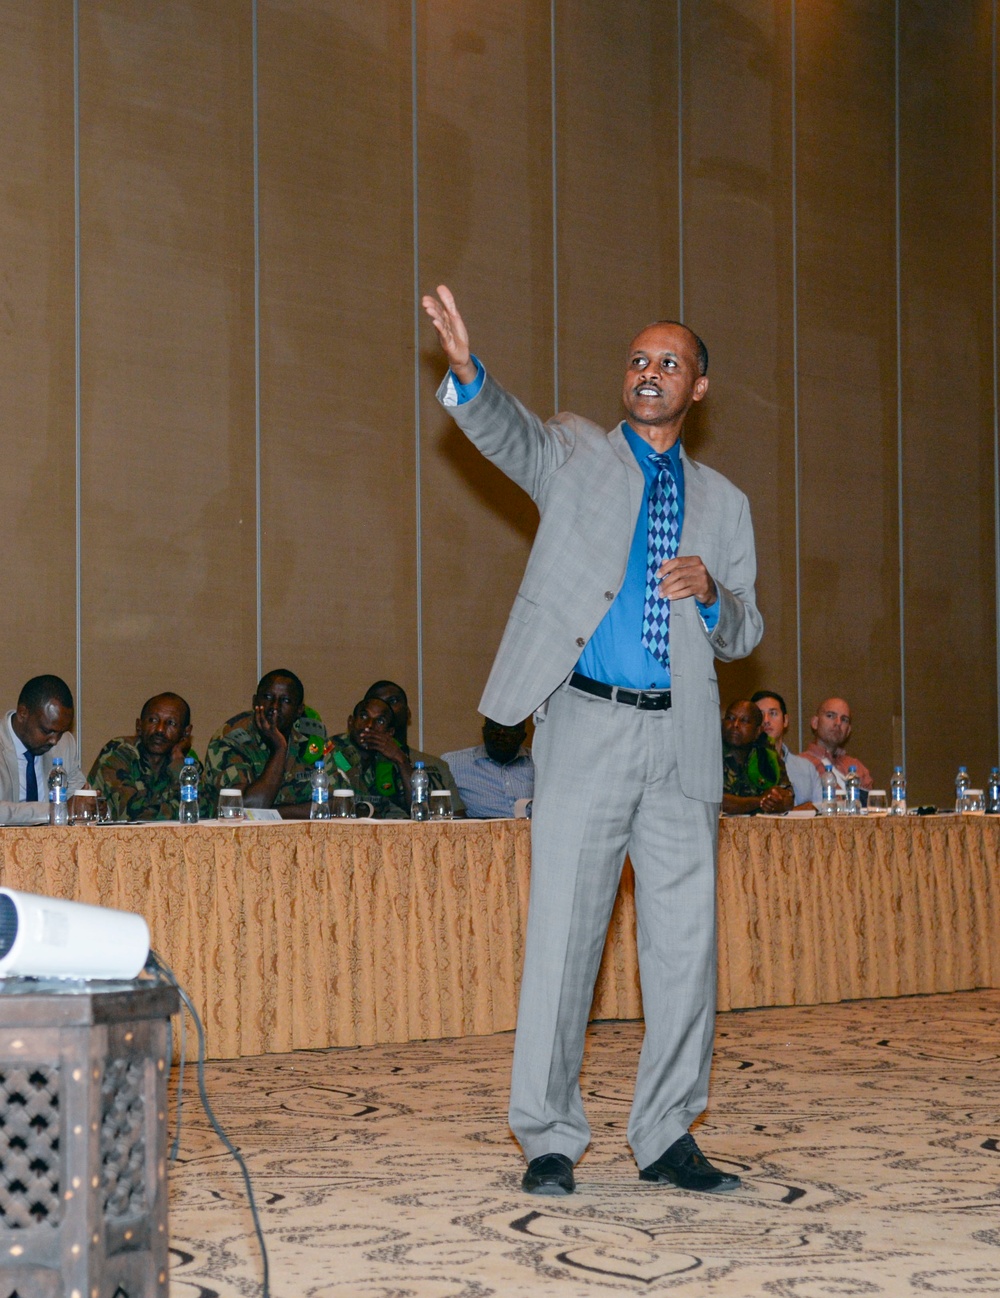 DVIDS News PIO conference highlights social media, messaging in Somalia